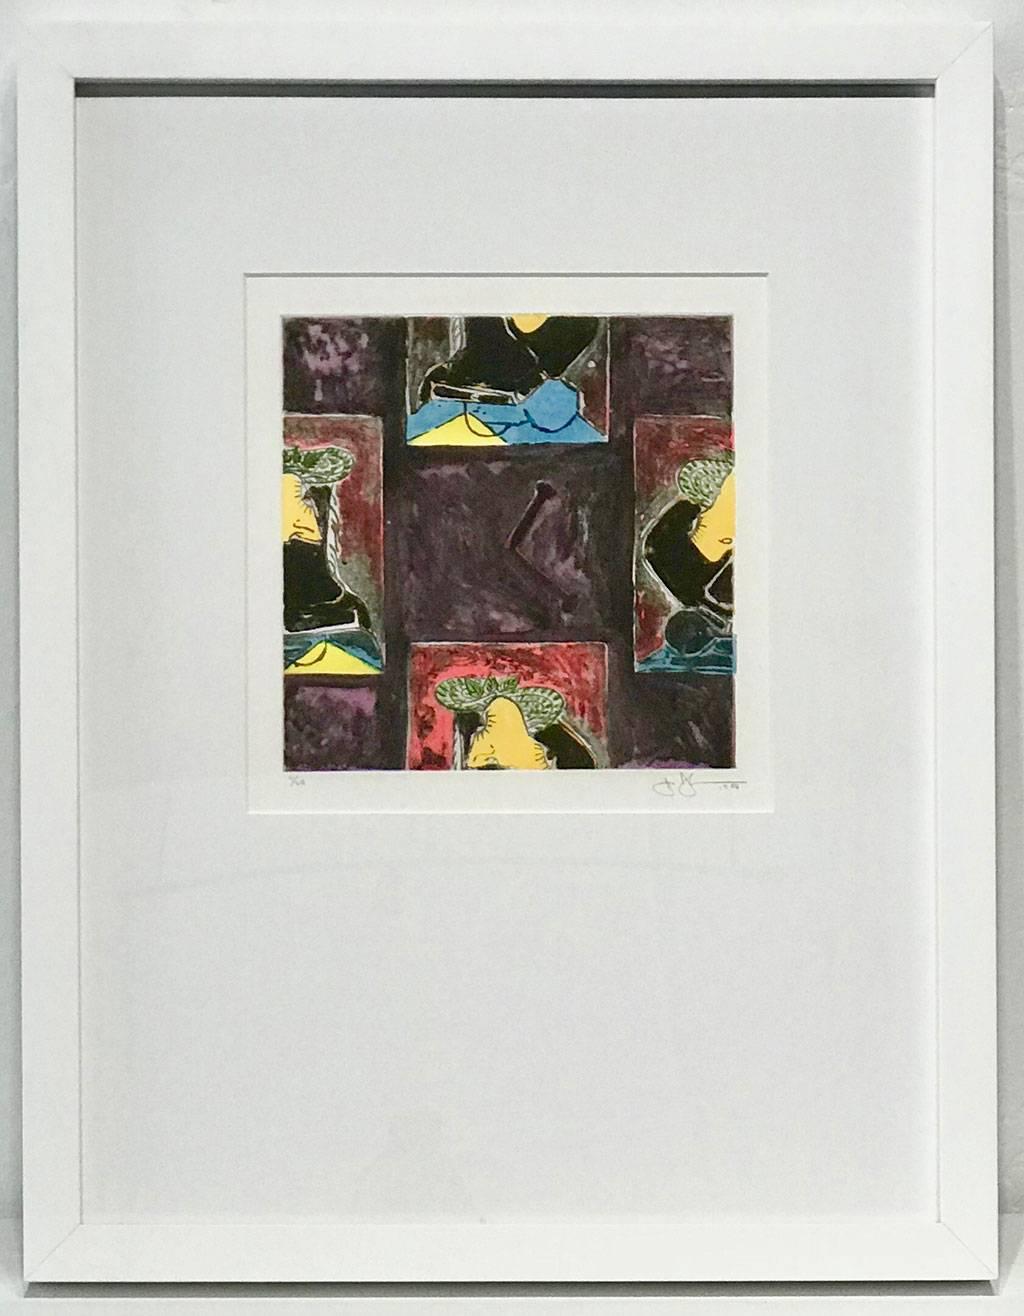 UNTITLED 1988 bis - Print by Jasper Johns